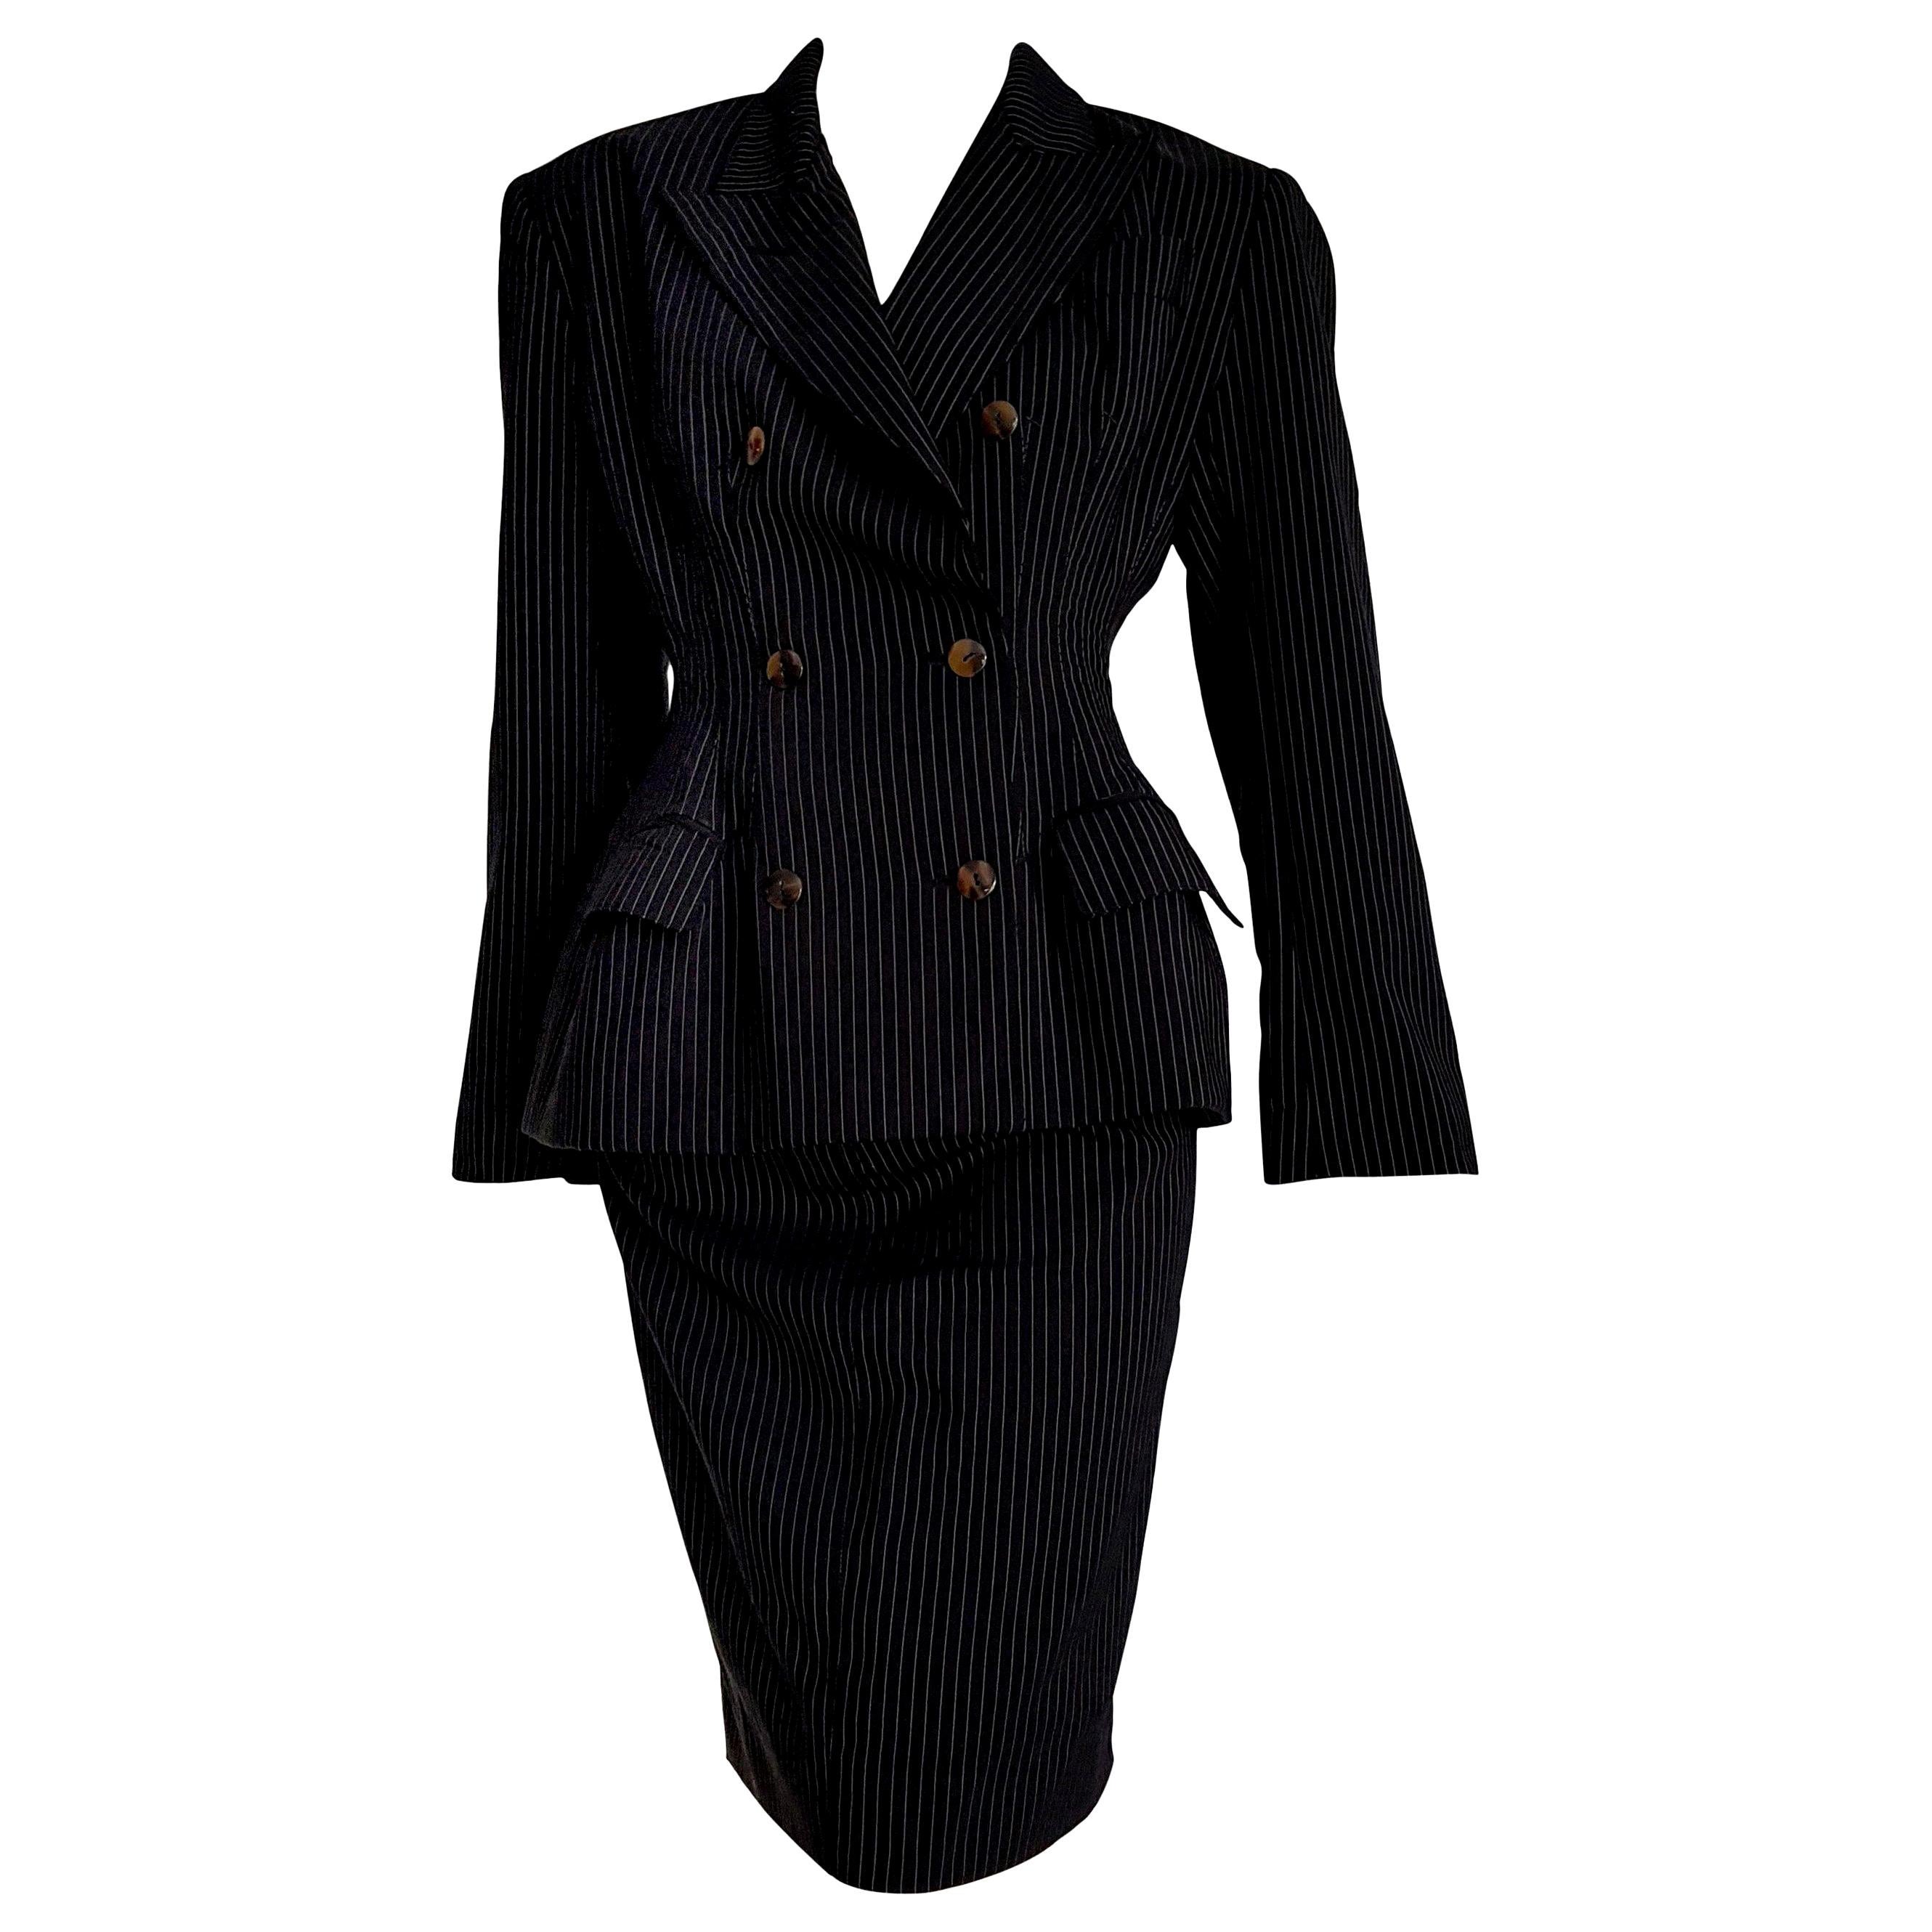 Jean Paul GAULTIER "New" Black with Gray lines Wool Skirt Suit - Unworn For Sale